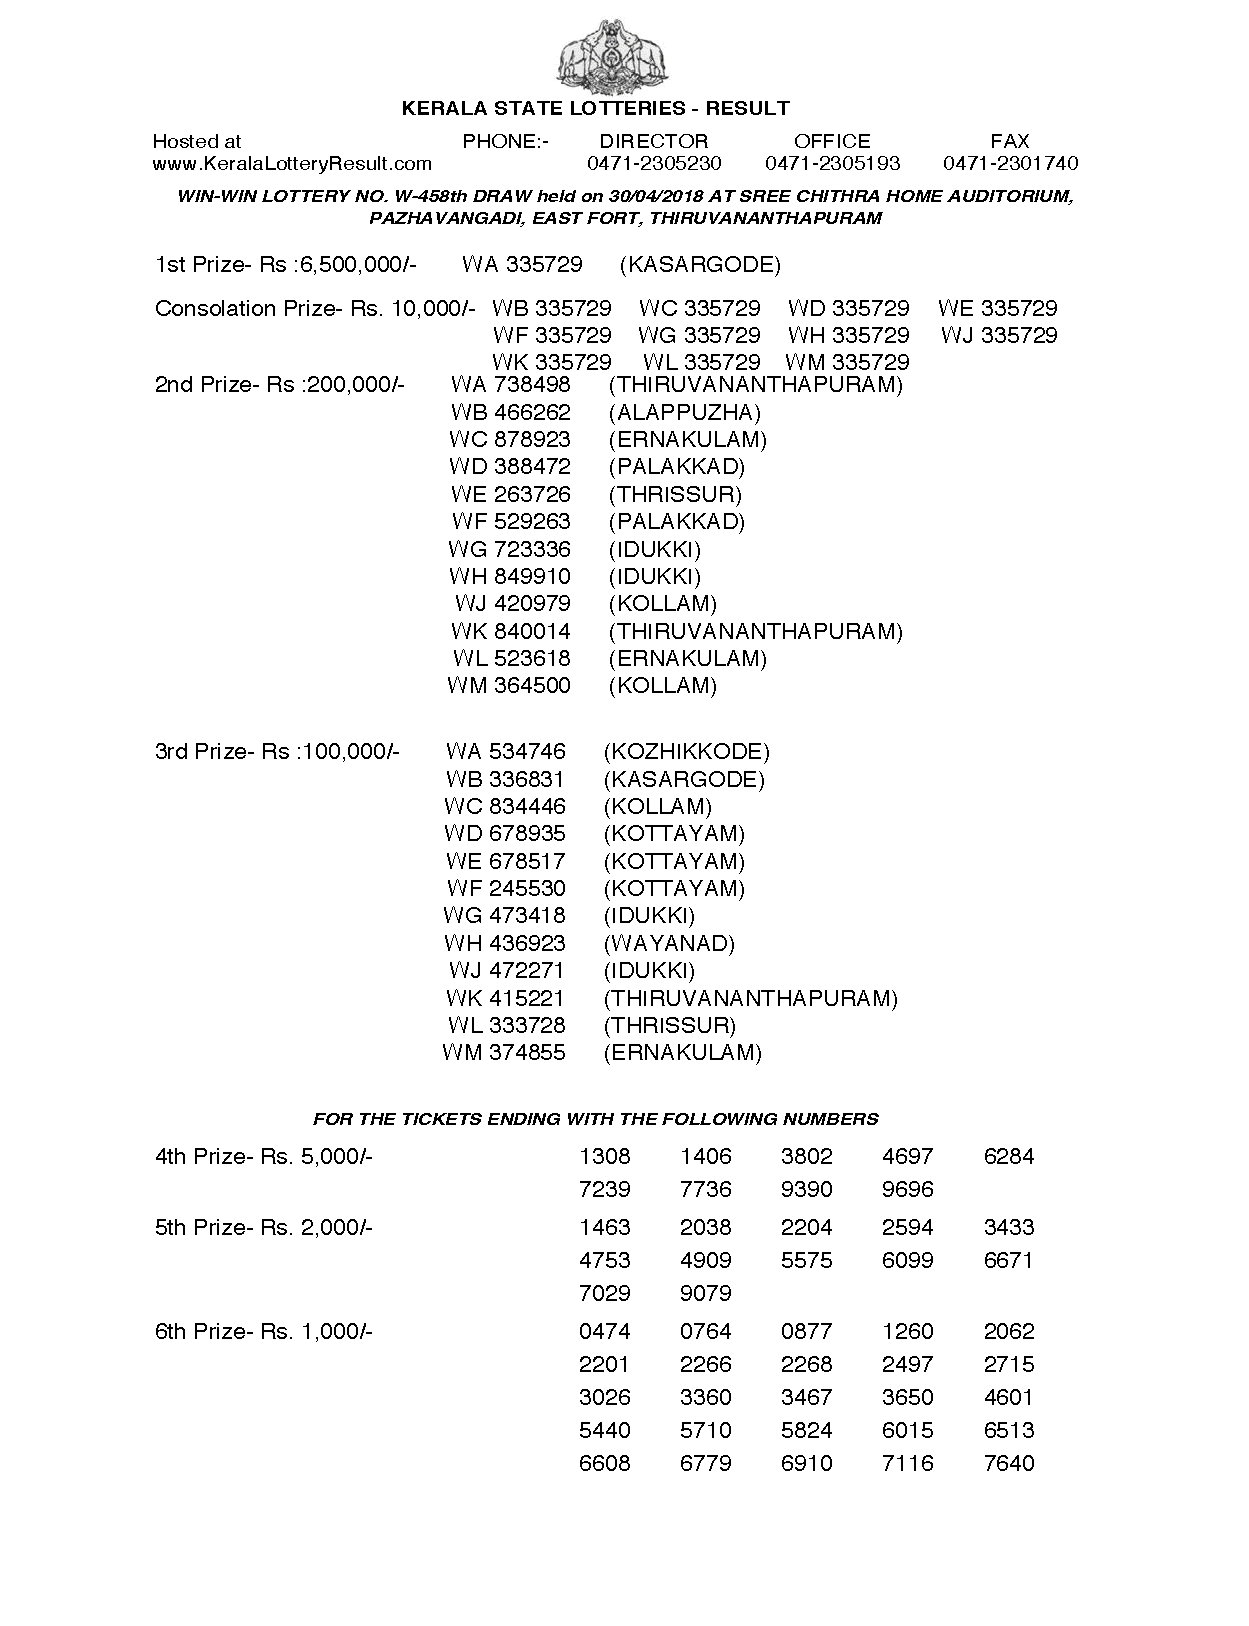 Winwin W458 Kerala Lottery Results Screenshot: Page 1